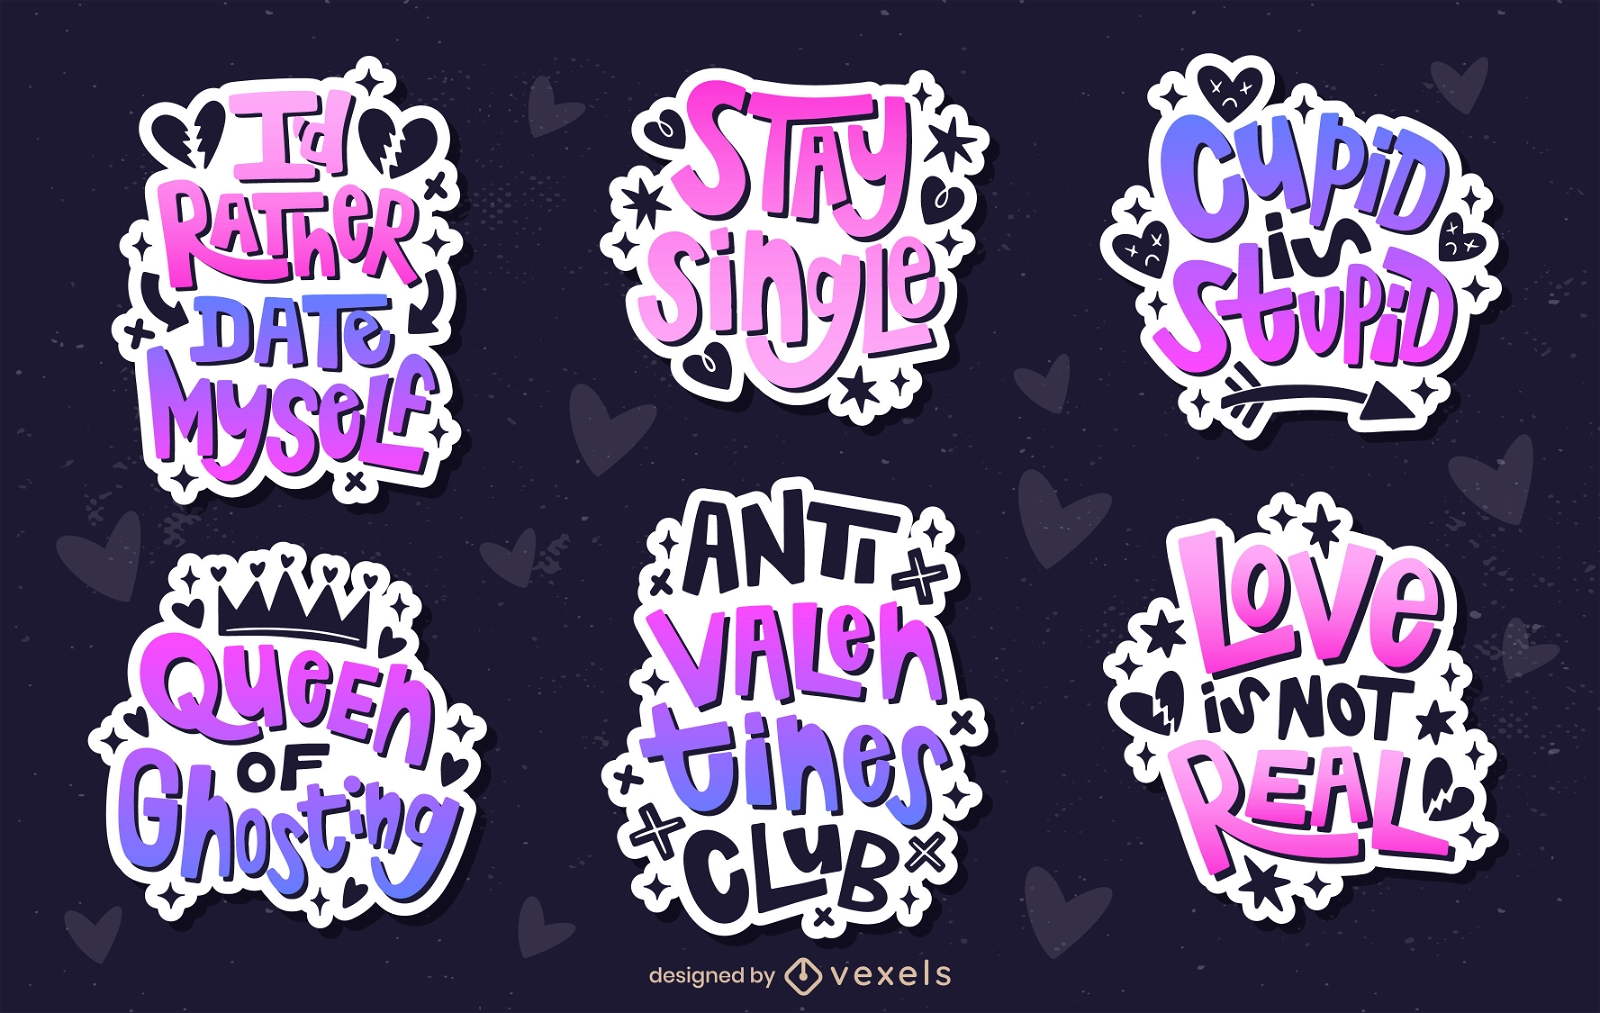 Anti Valentine's quotes sticker set